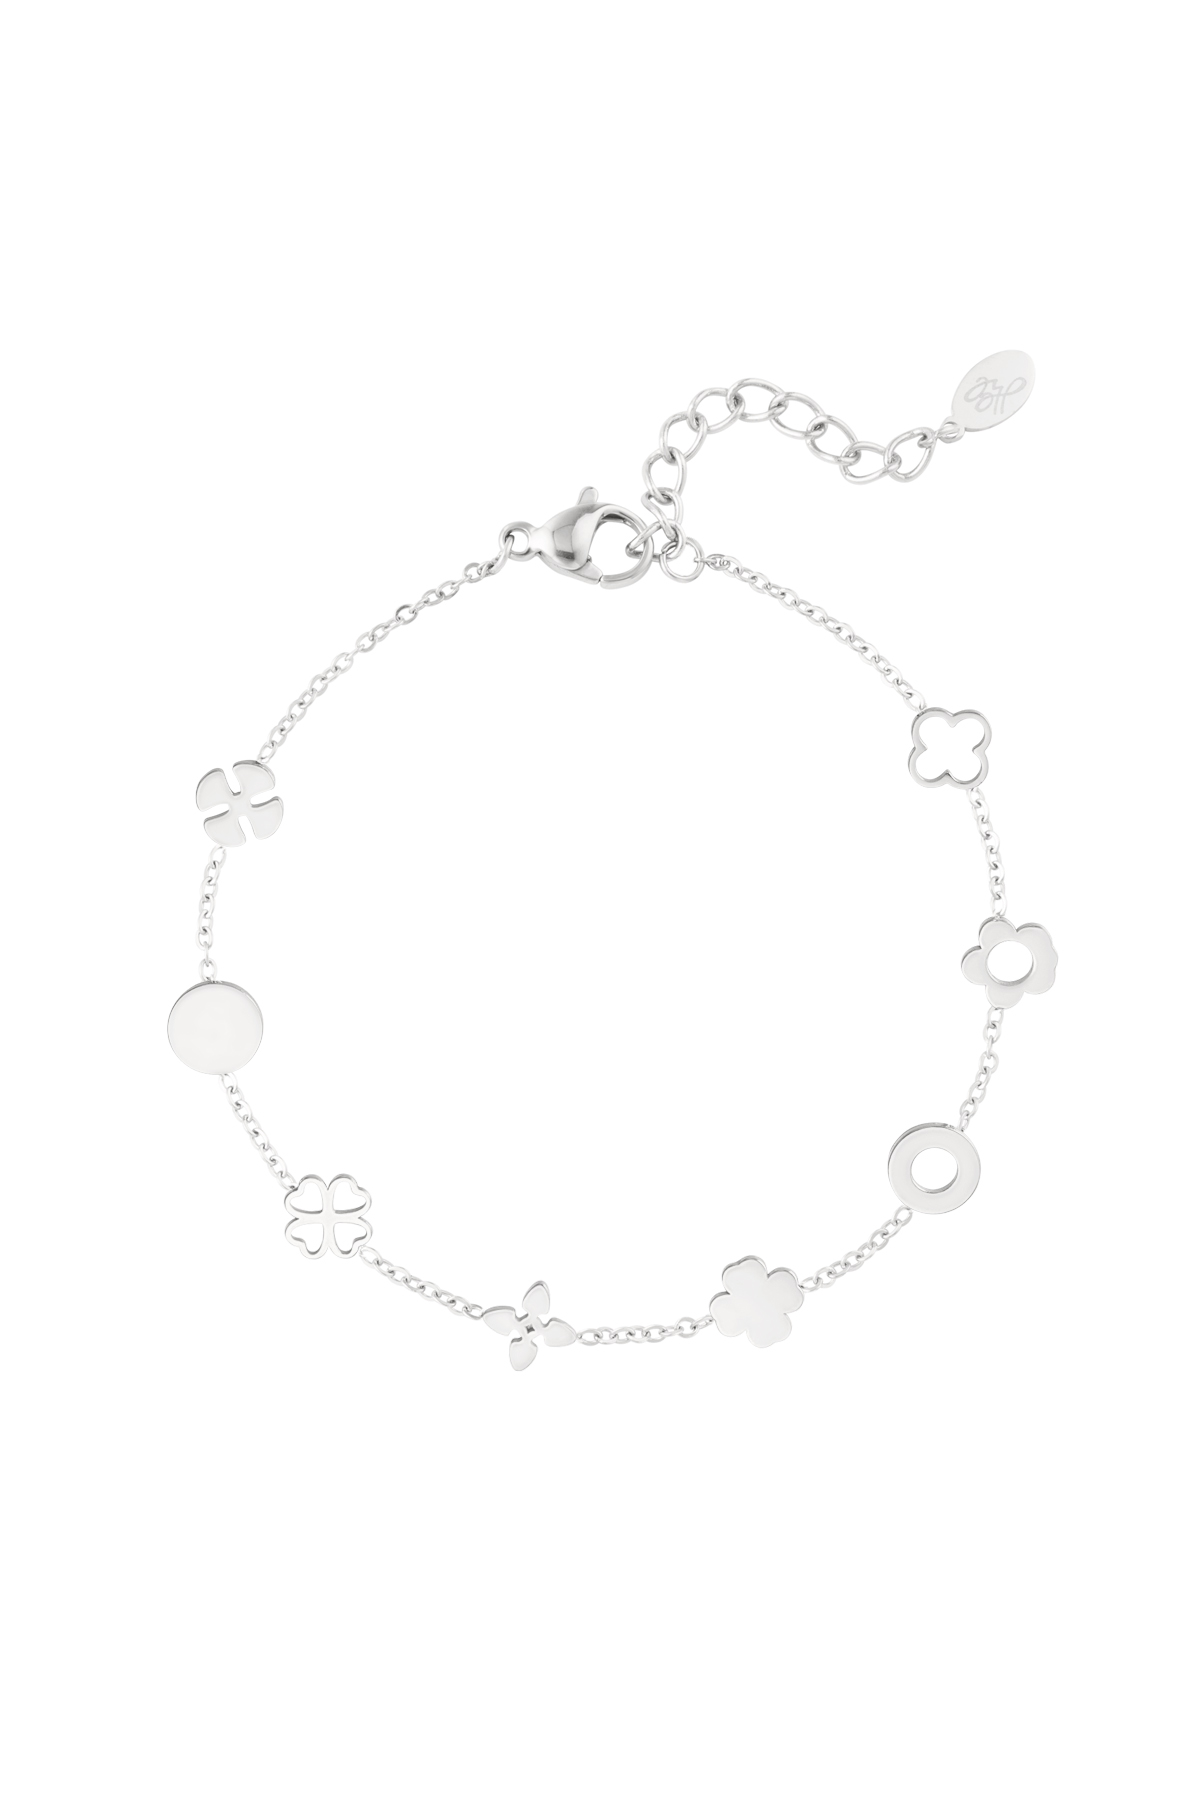 Bracelet charms - silver h5 